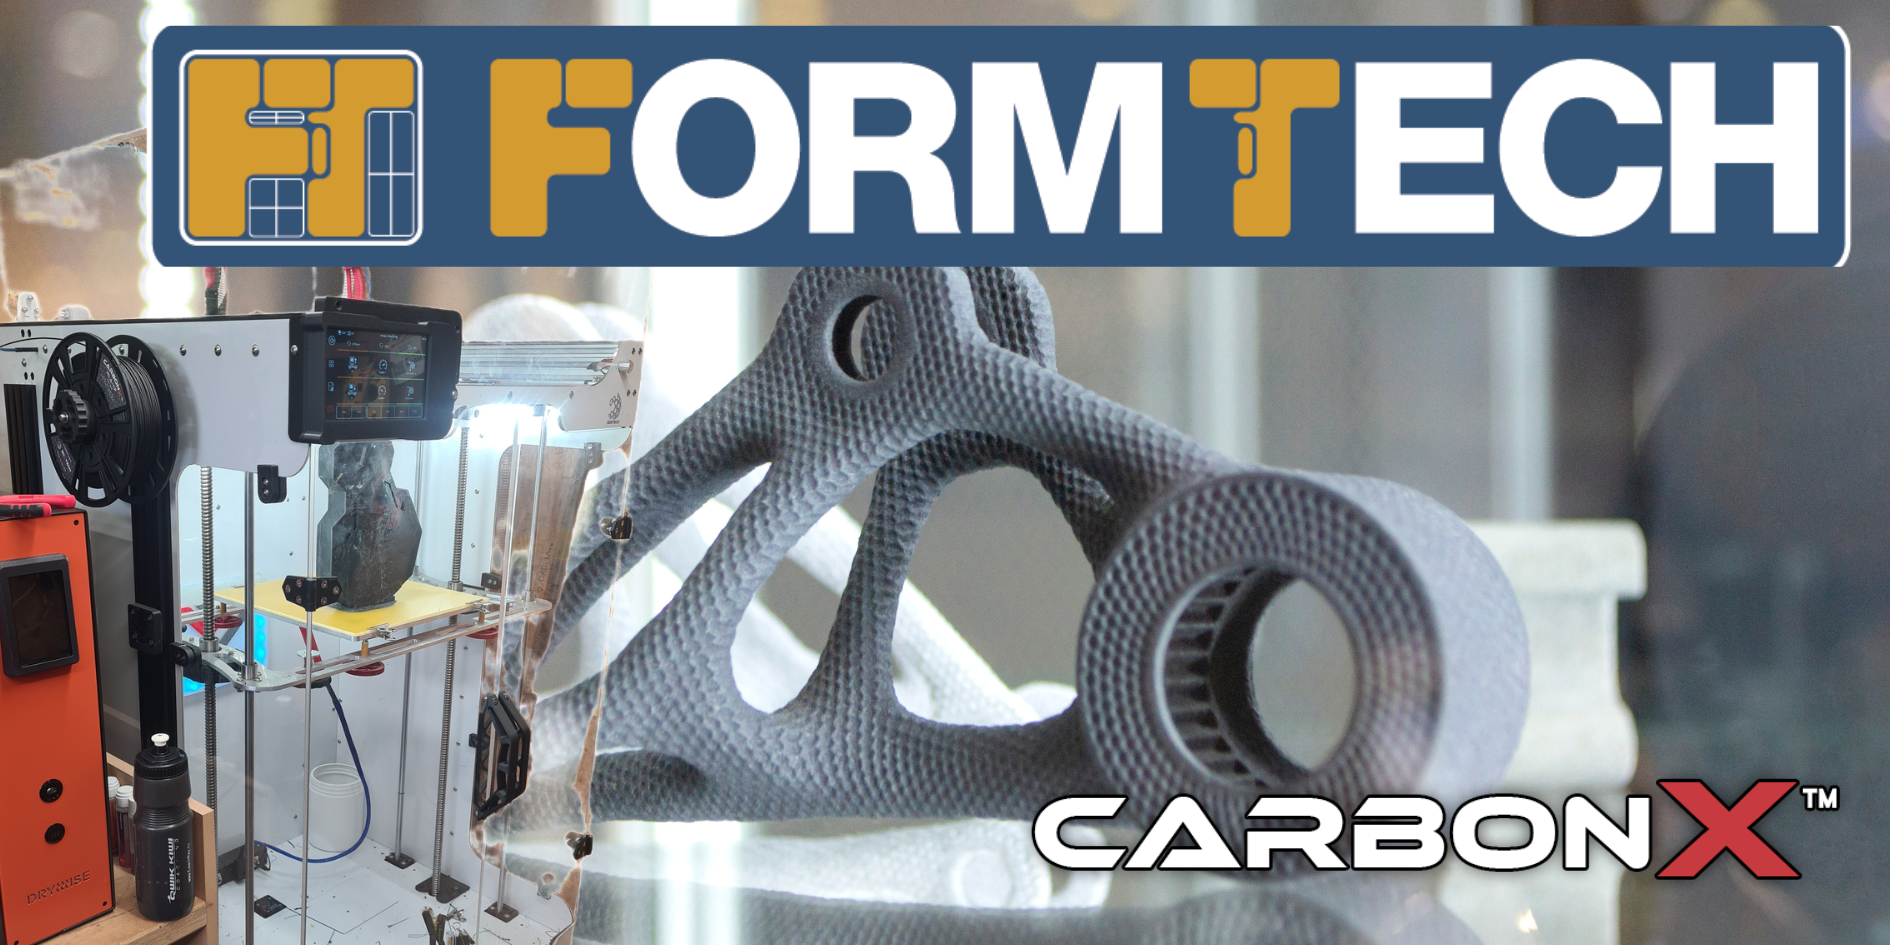 Formtech- High quality 3D printing plastics — FormTech